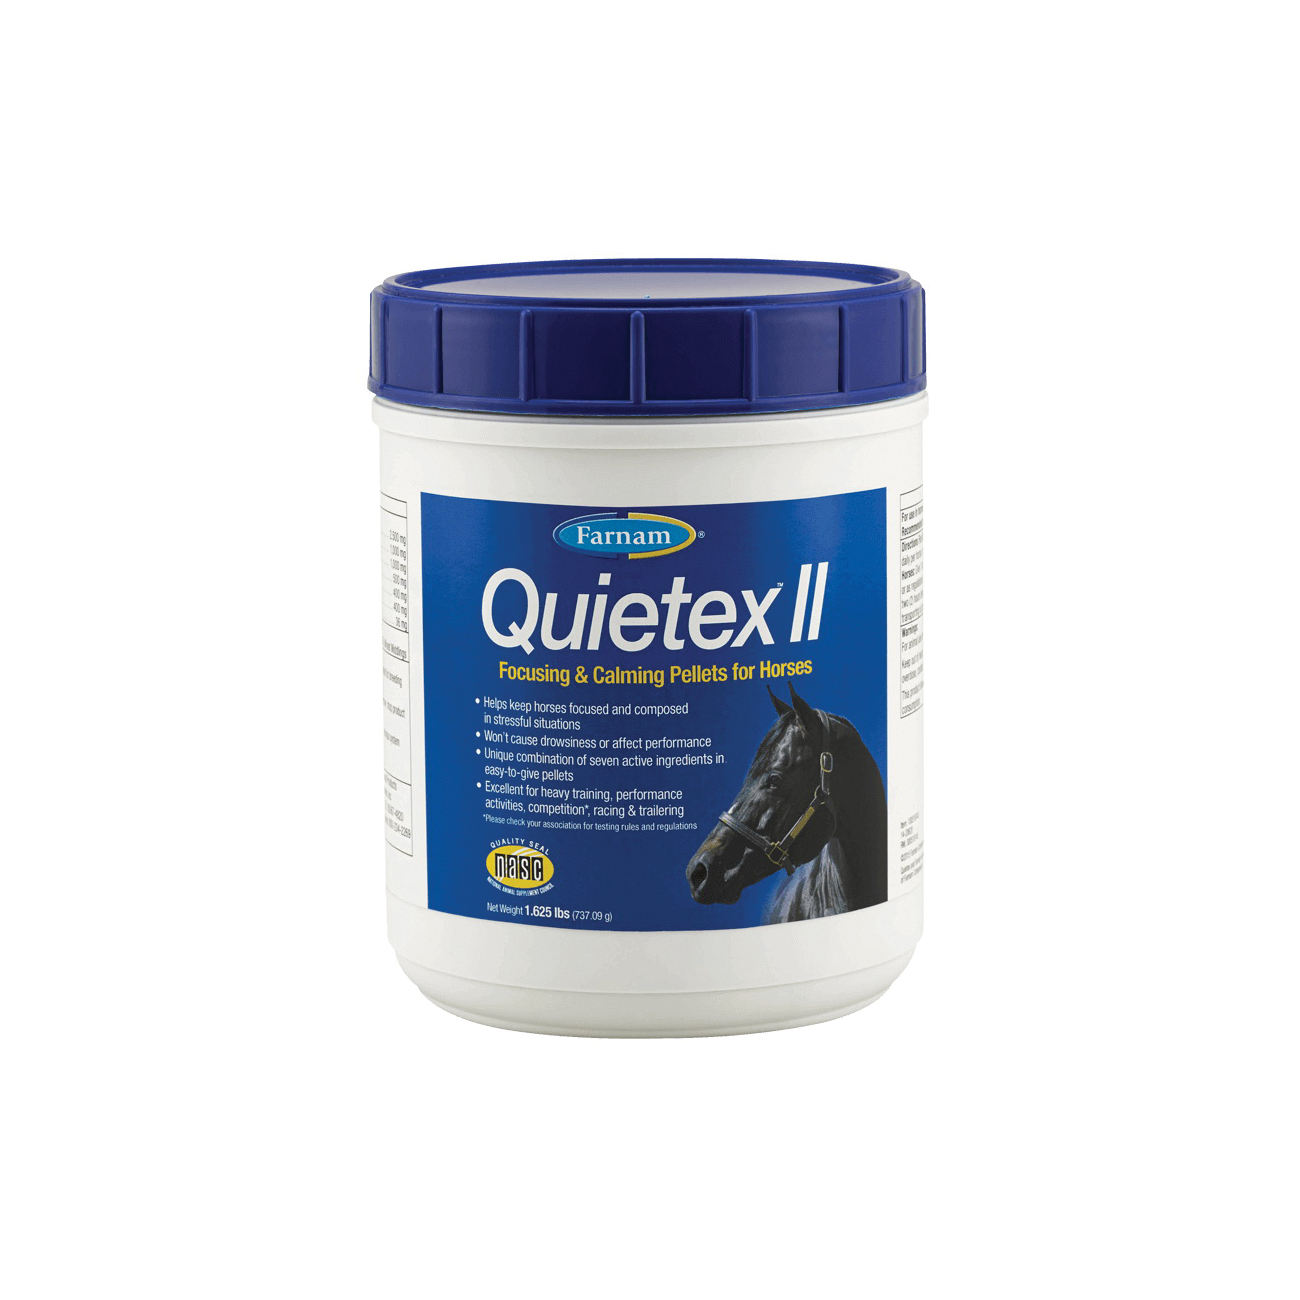 Quietex II 100519743 Focusing and Calming Supplement, 1.625 lb